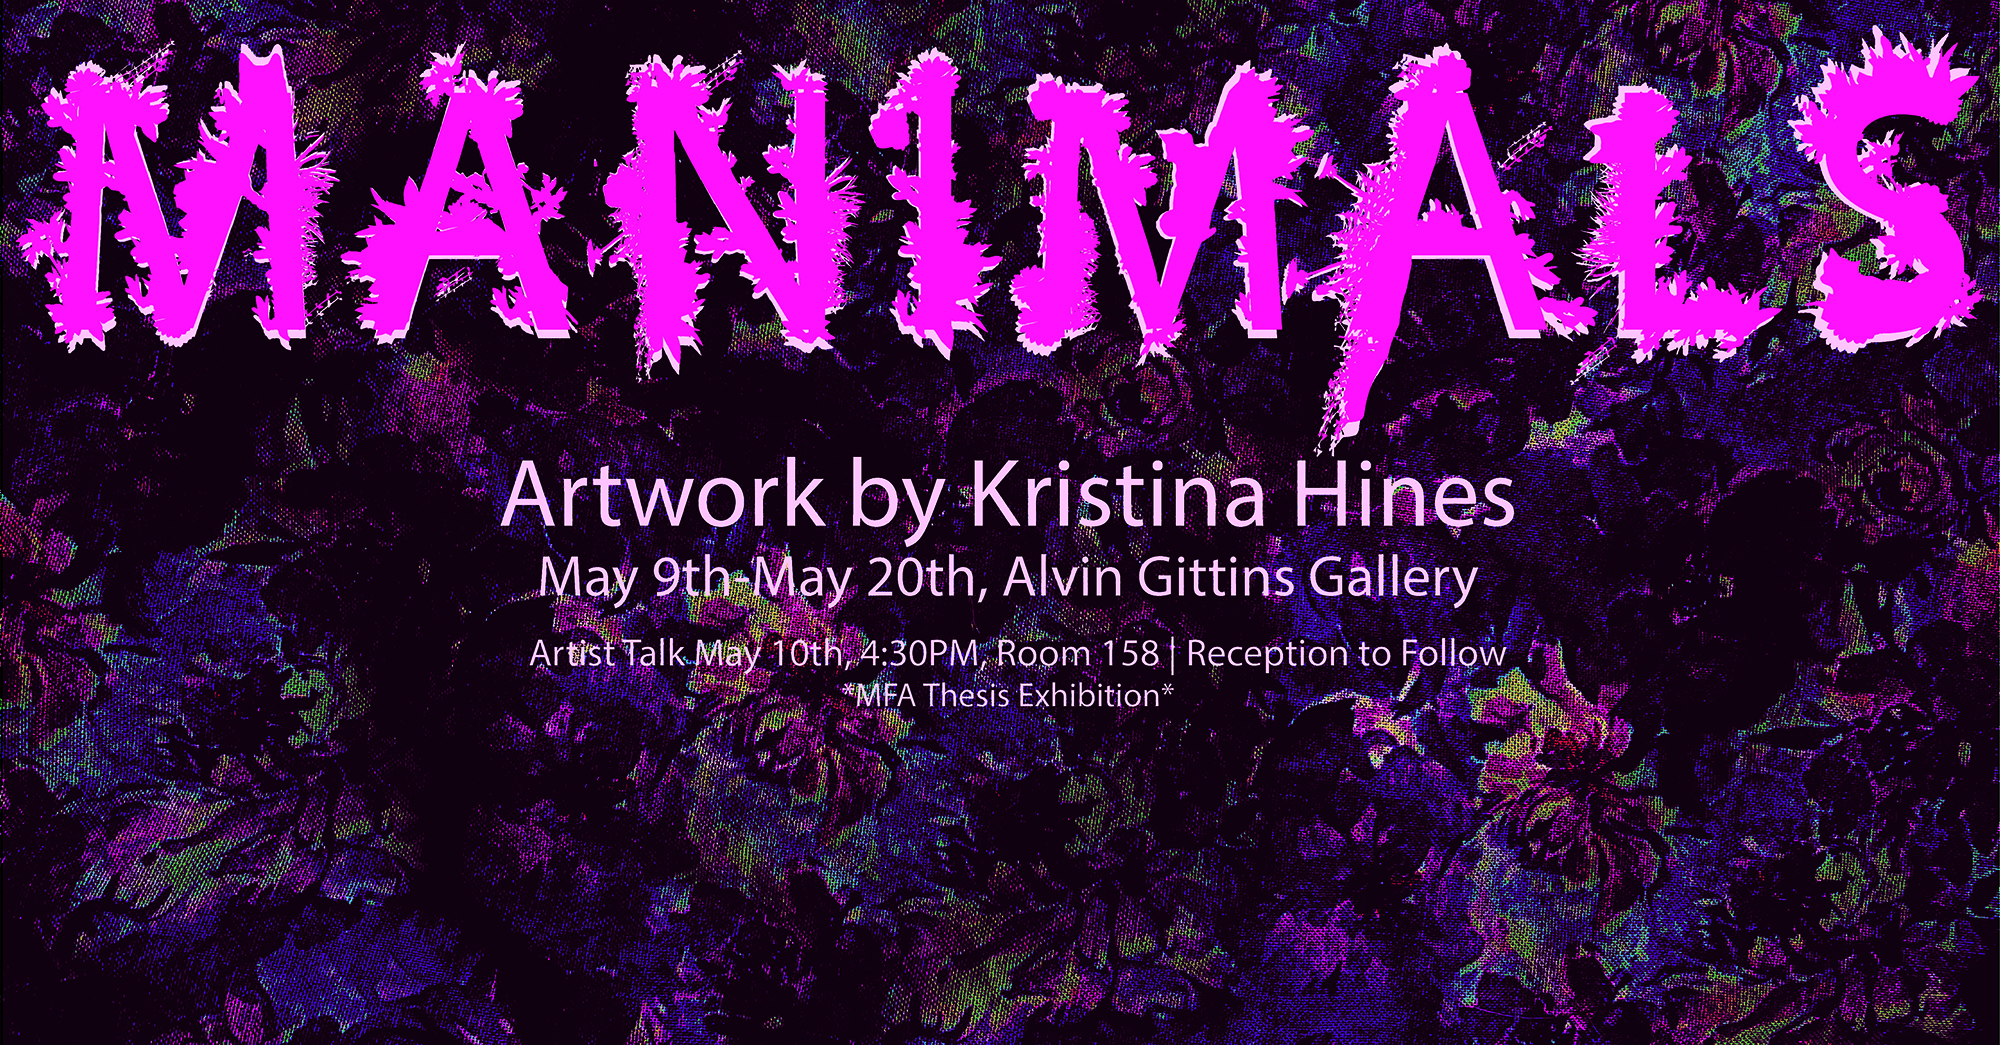 Kristina Hines exhibition poster